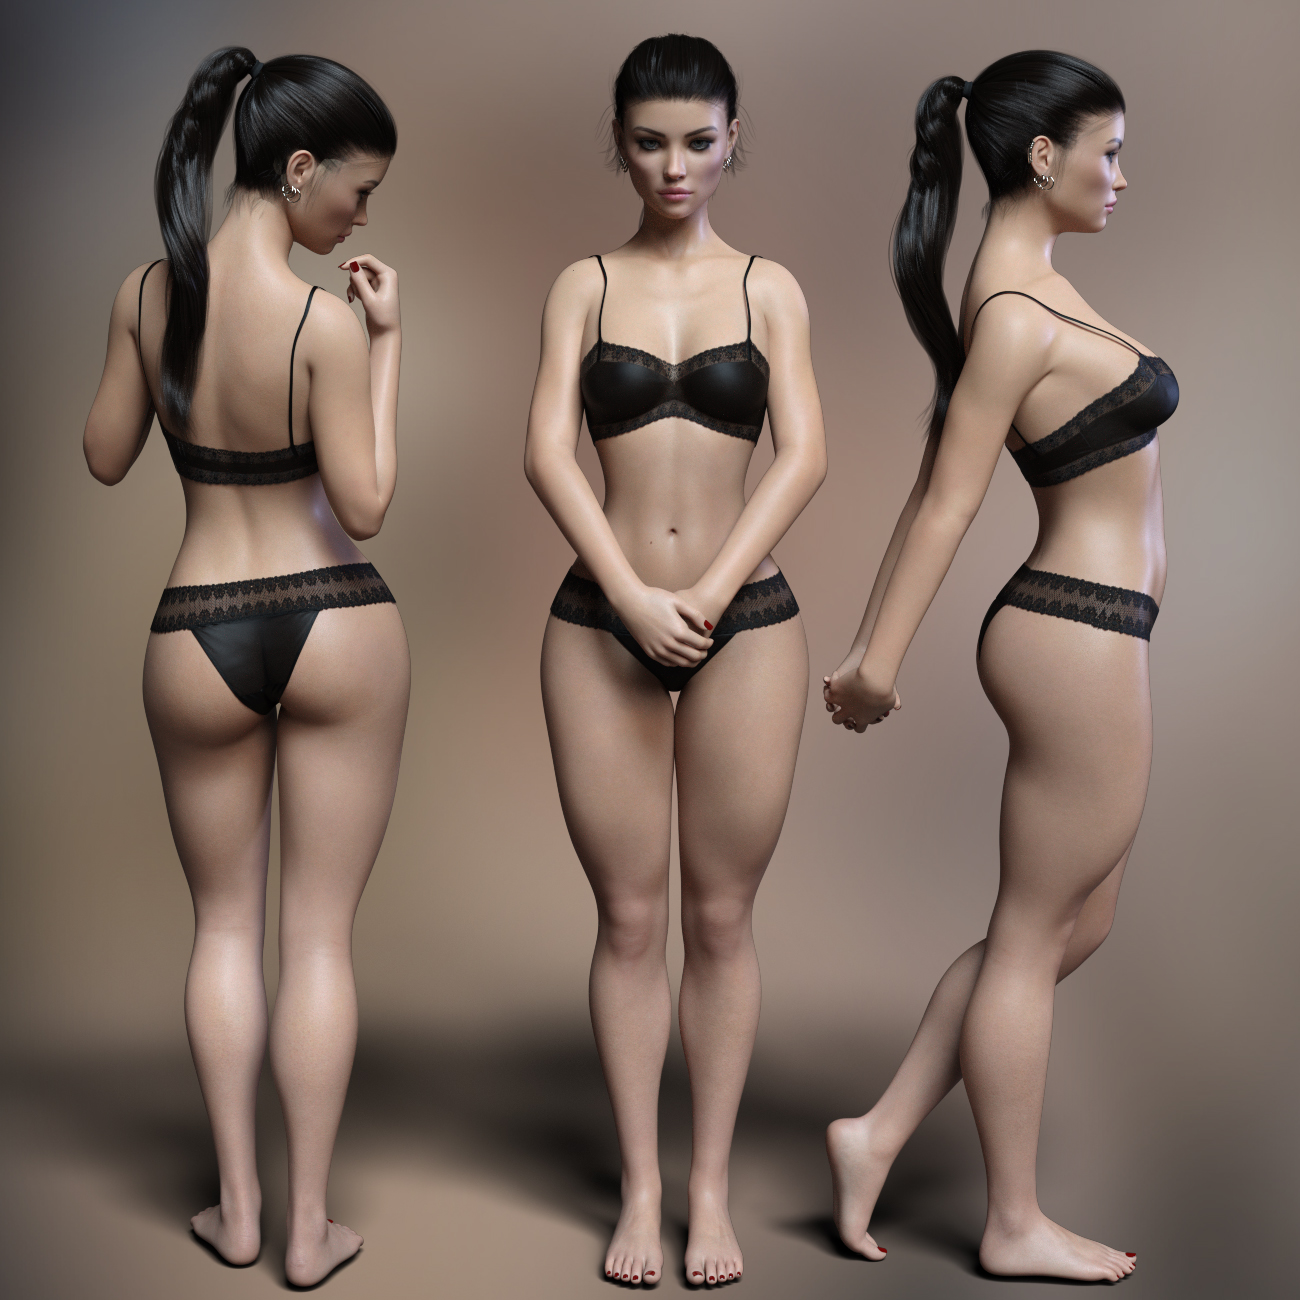 P3D Yvette for Genesis 8 Female by: P3Design, 3D Models by Daz 3D